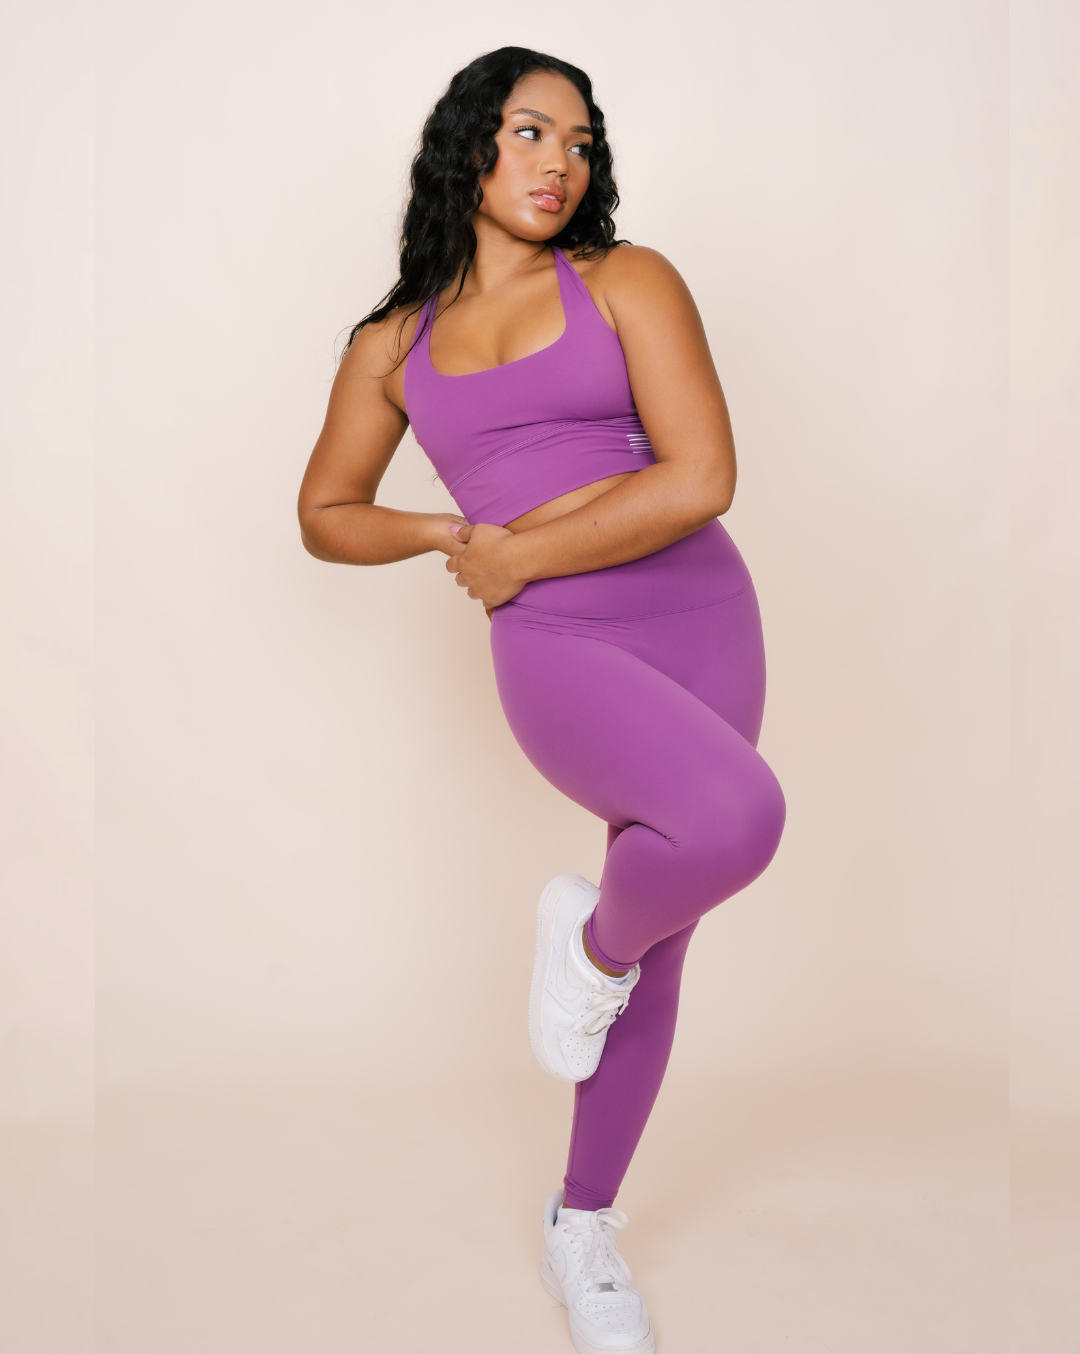 DailyWear Womens Solid Knee Length Short Yoga Cotton Leggings H.Gry, XLarge  Heather Grey